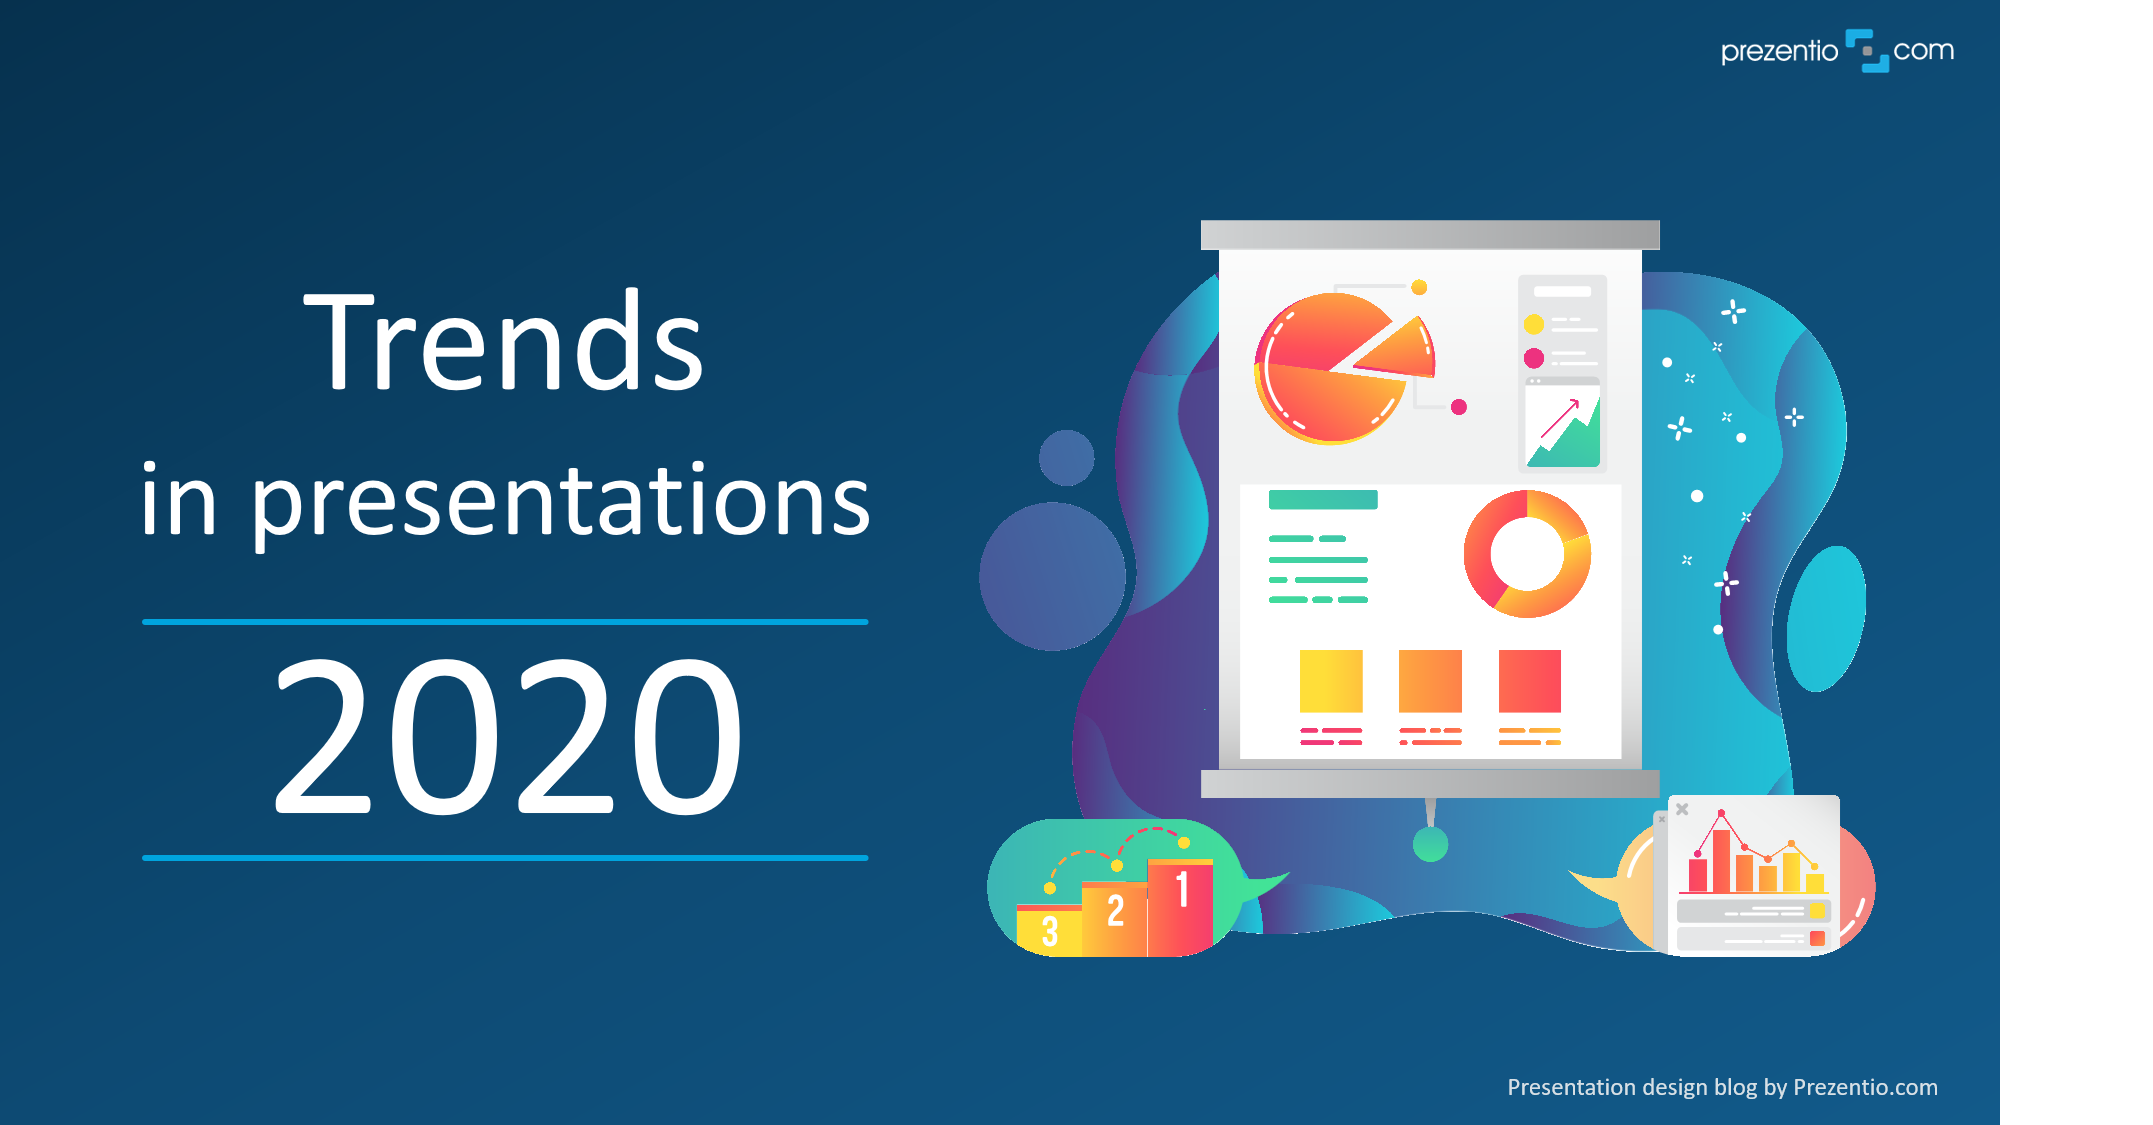 6 important trends in presentation design for 2020